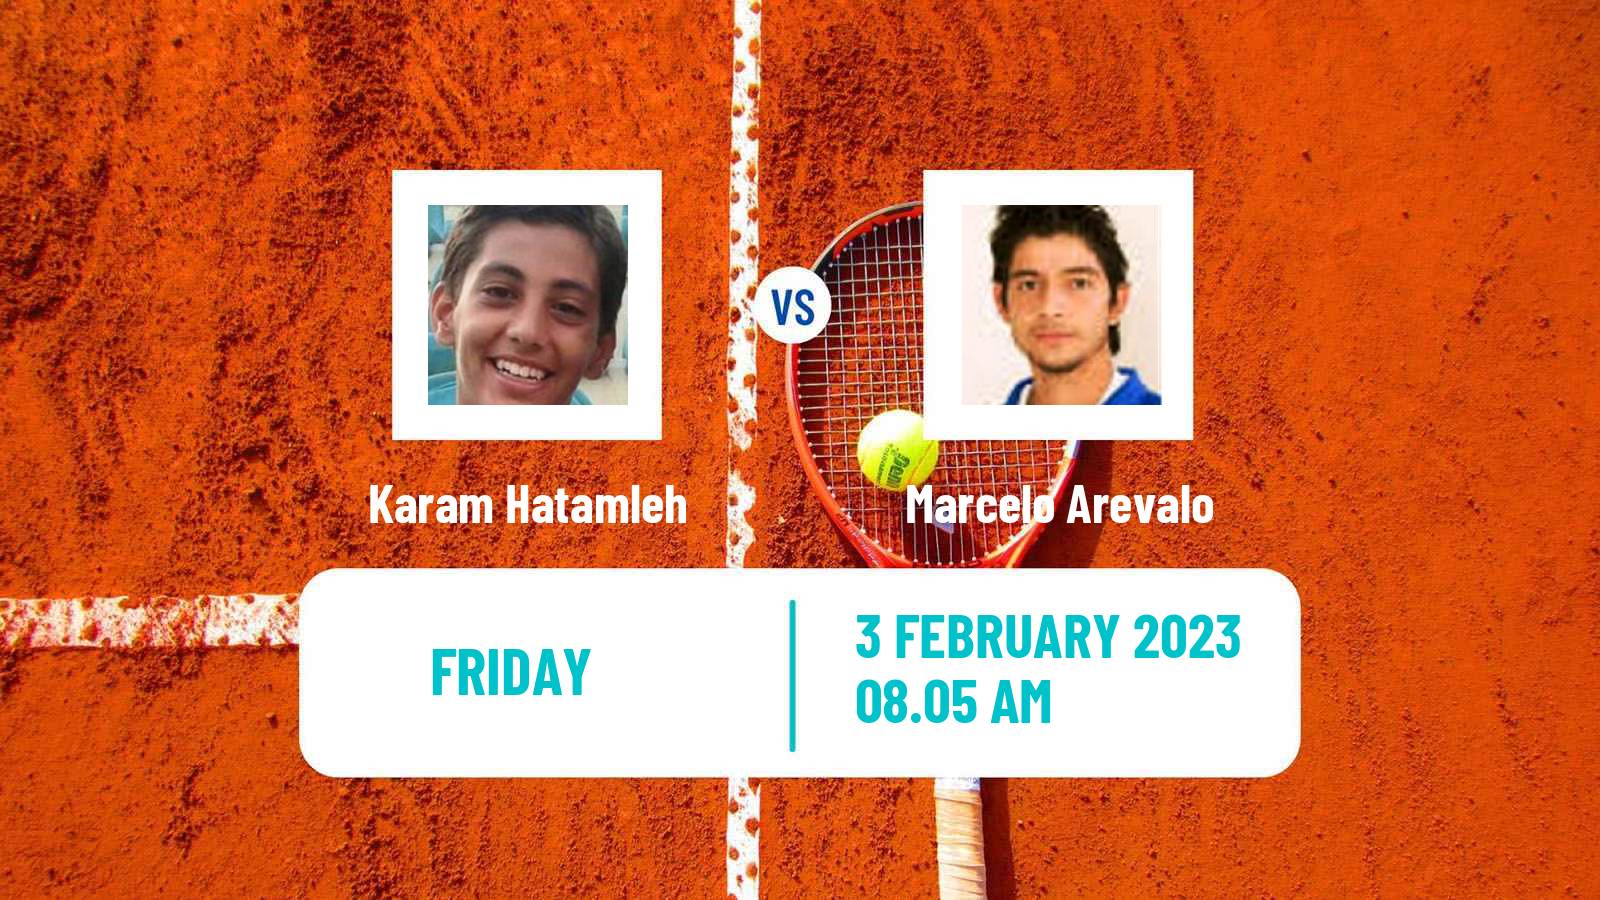 Tennis Davis Cup World Group II Karam Hatamleh - Marcelo Arevalo